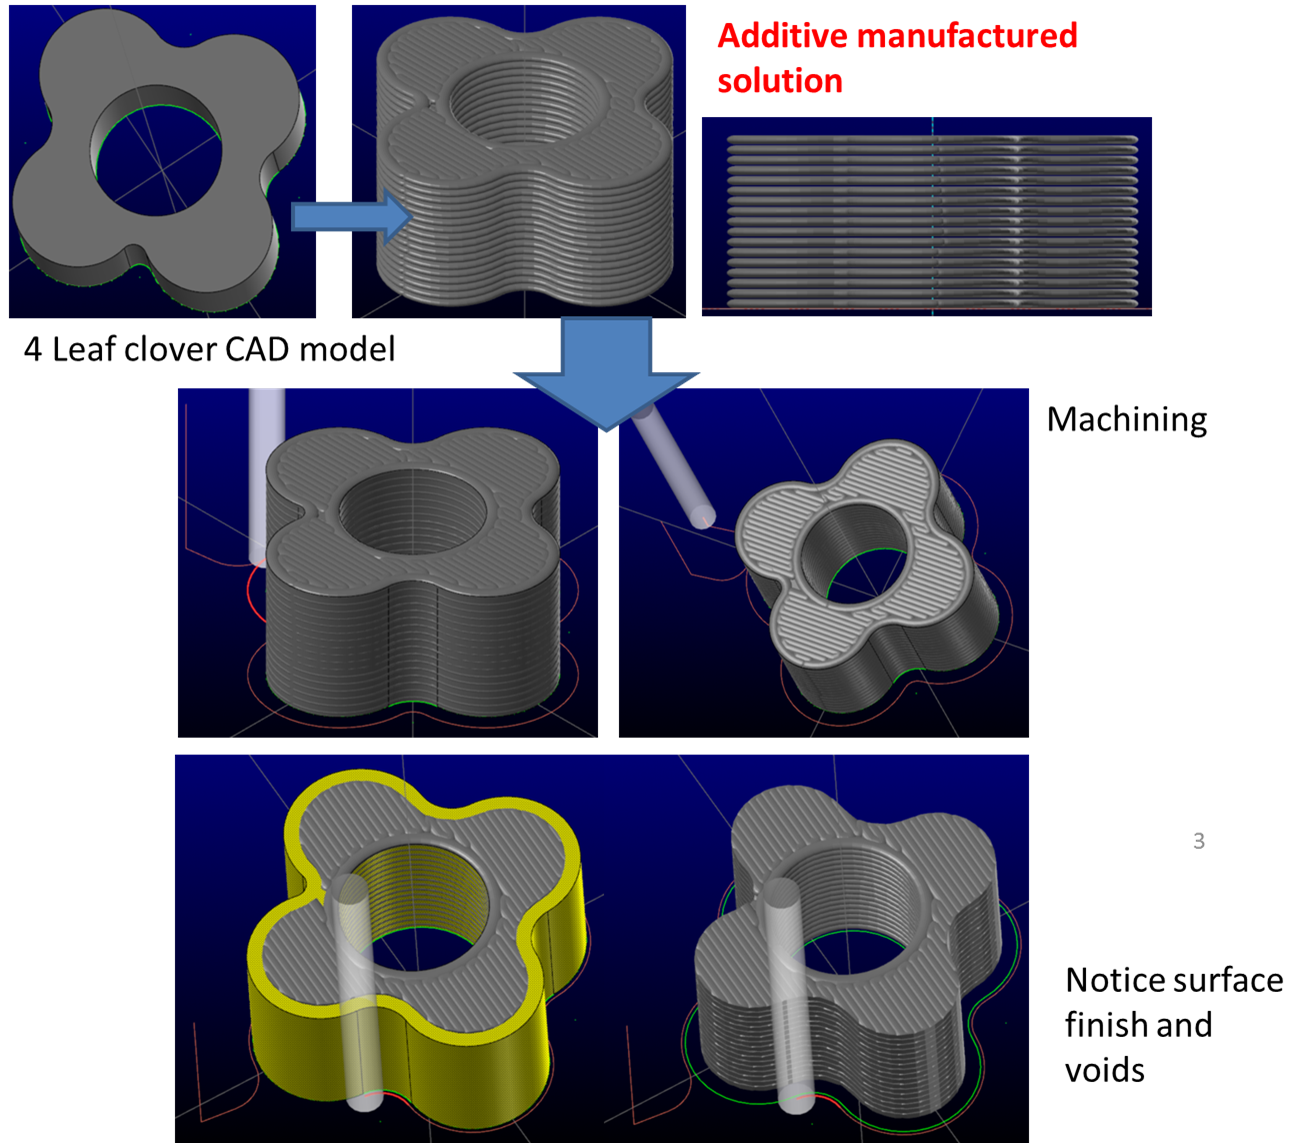 Cloverleaf CAD model simulation